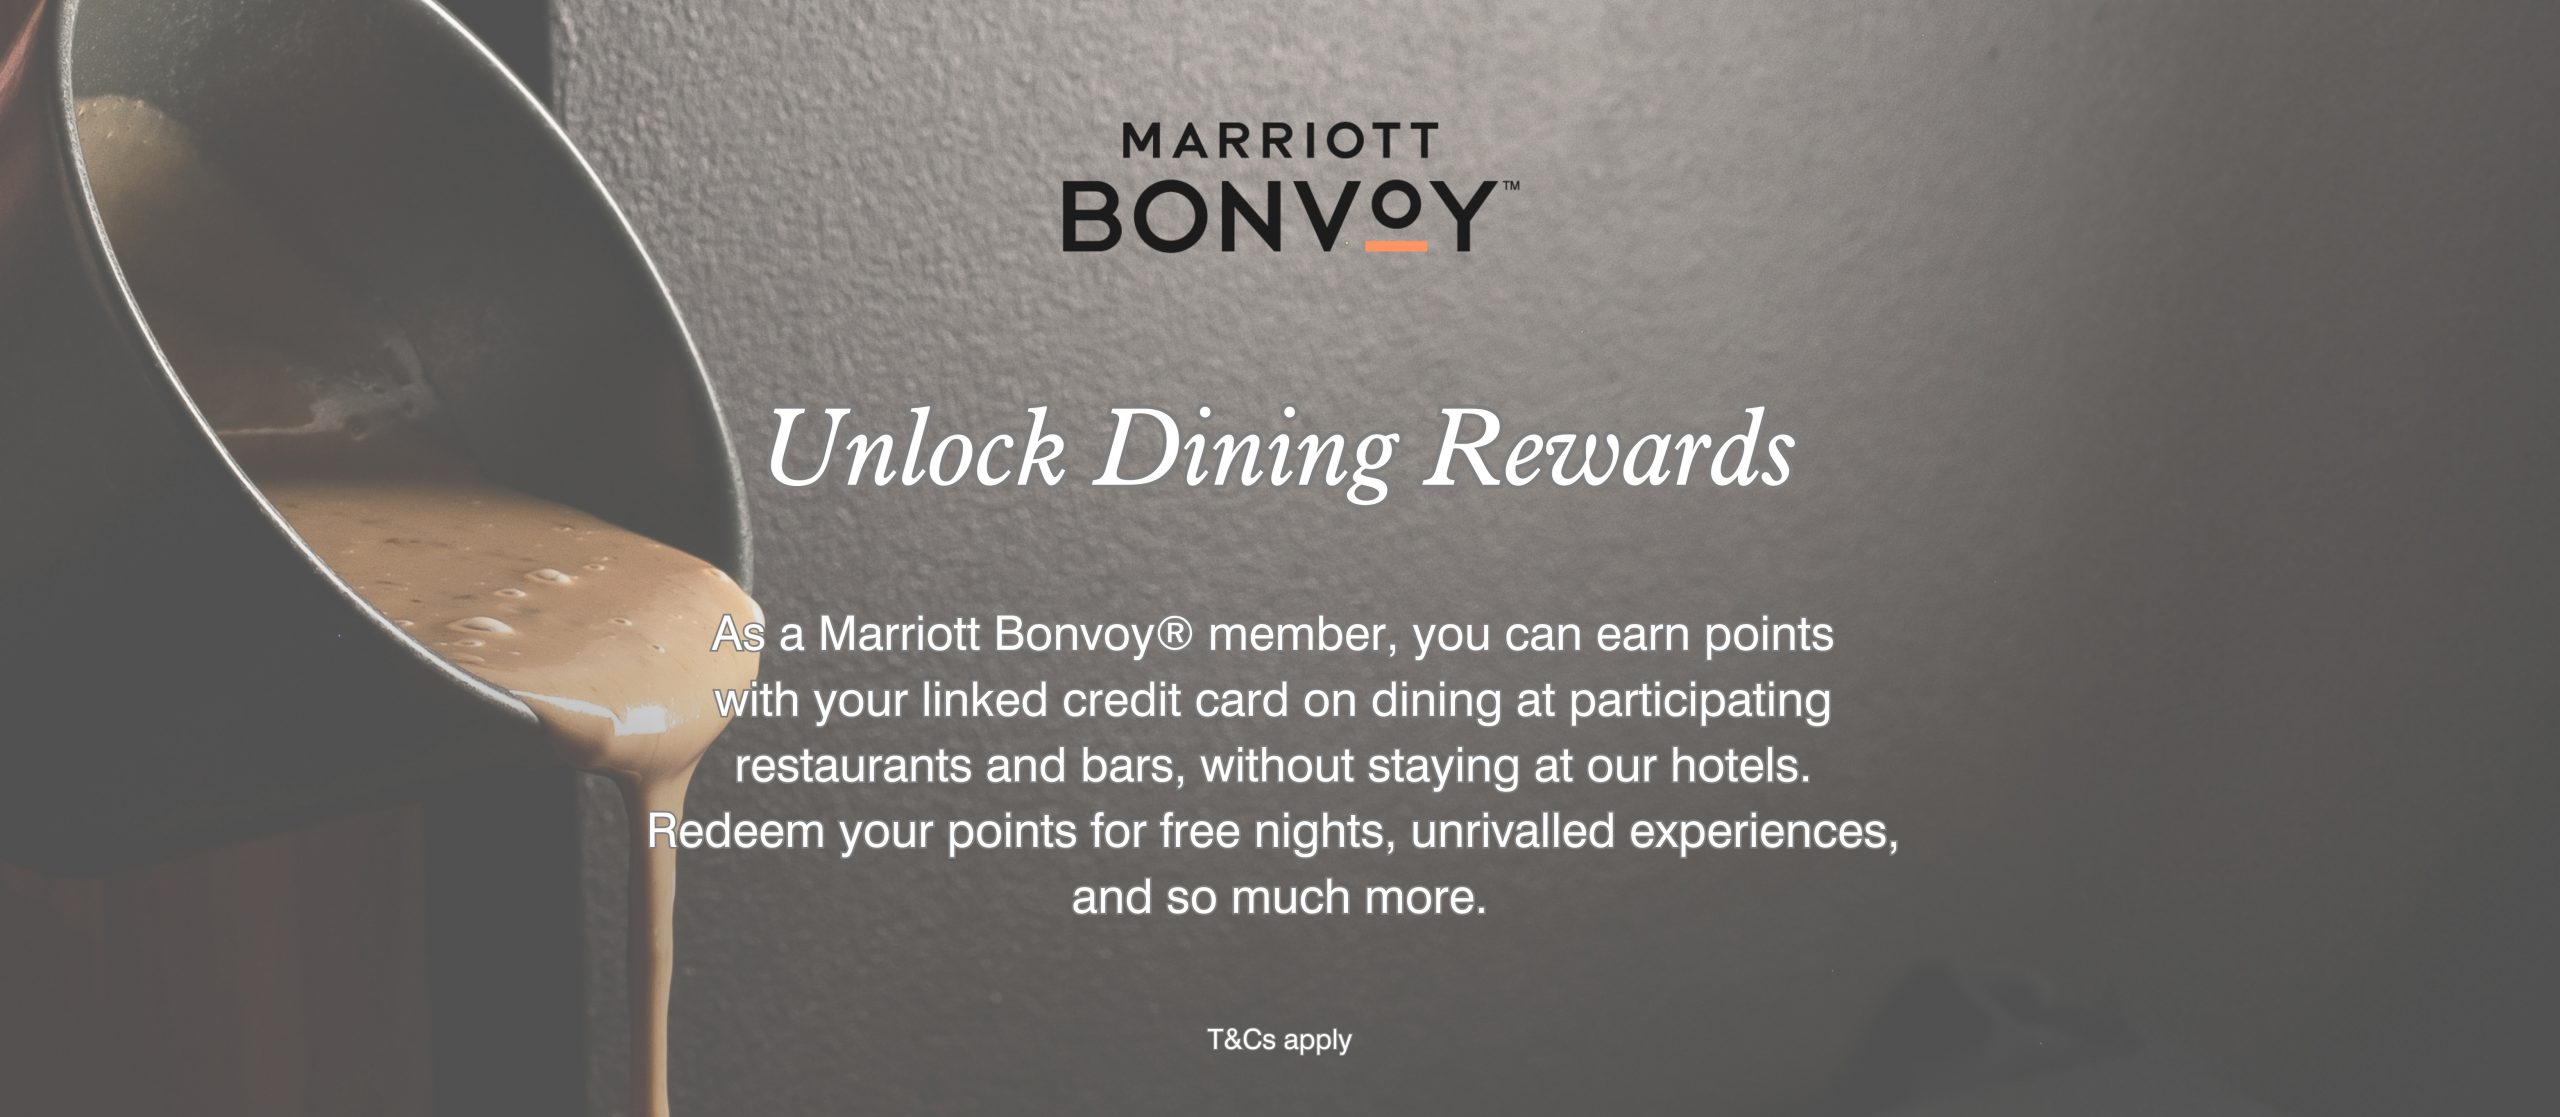 Dining Rewards with Marriott Bonvoy